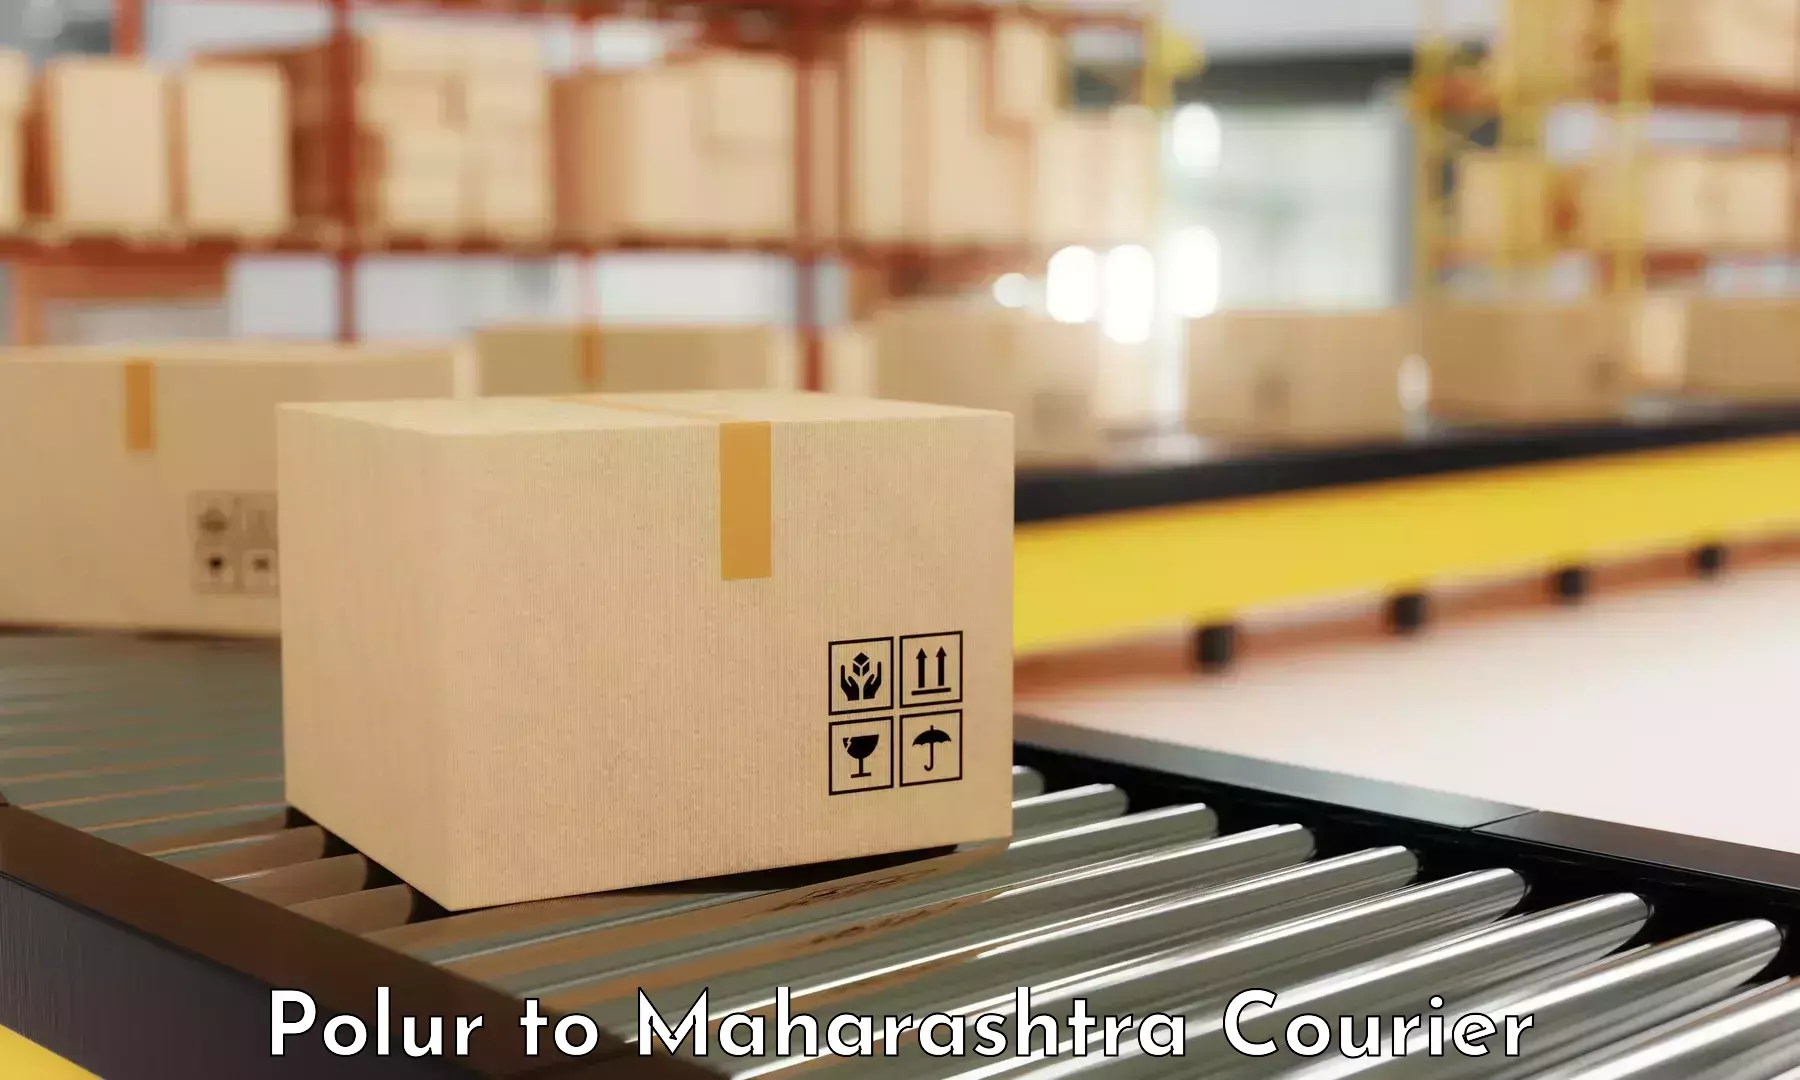 Courier service efficiency Polur to Ahmednagar